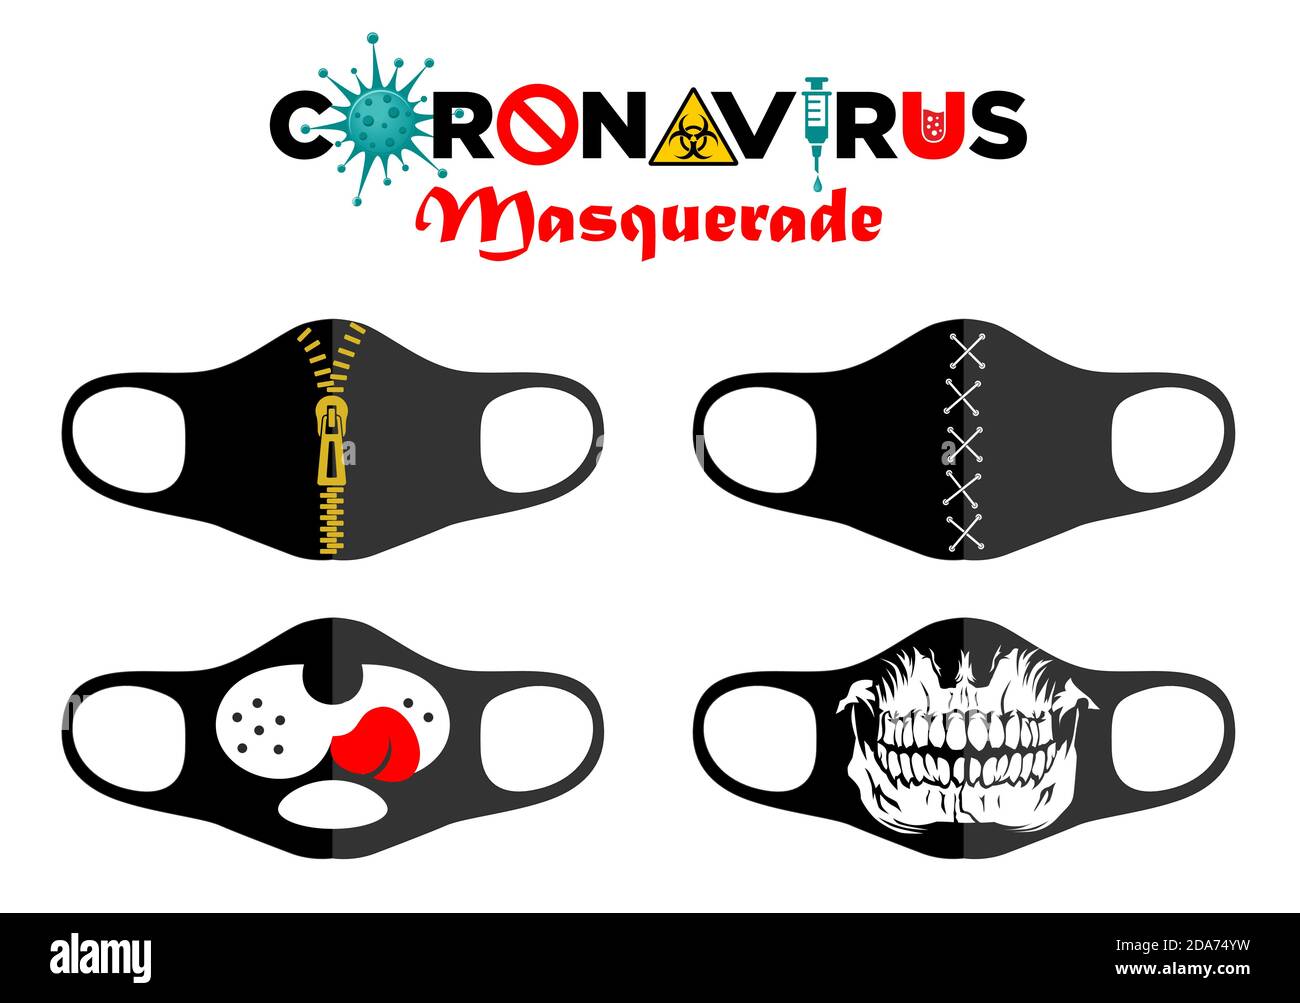 Print design concept on reusable face protection masks. Entertainment during coronavirus quarantine. Funny cartoon faces - smile, skull, zipper. Illus Stock Vector